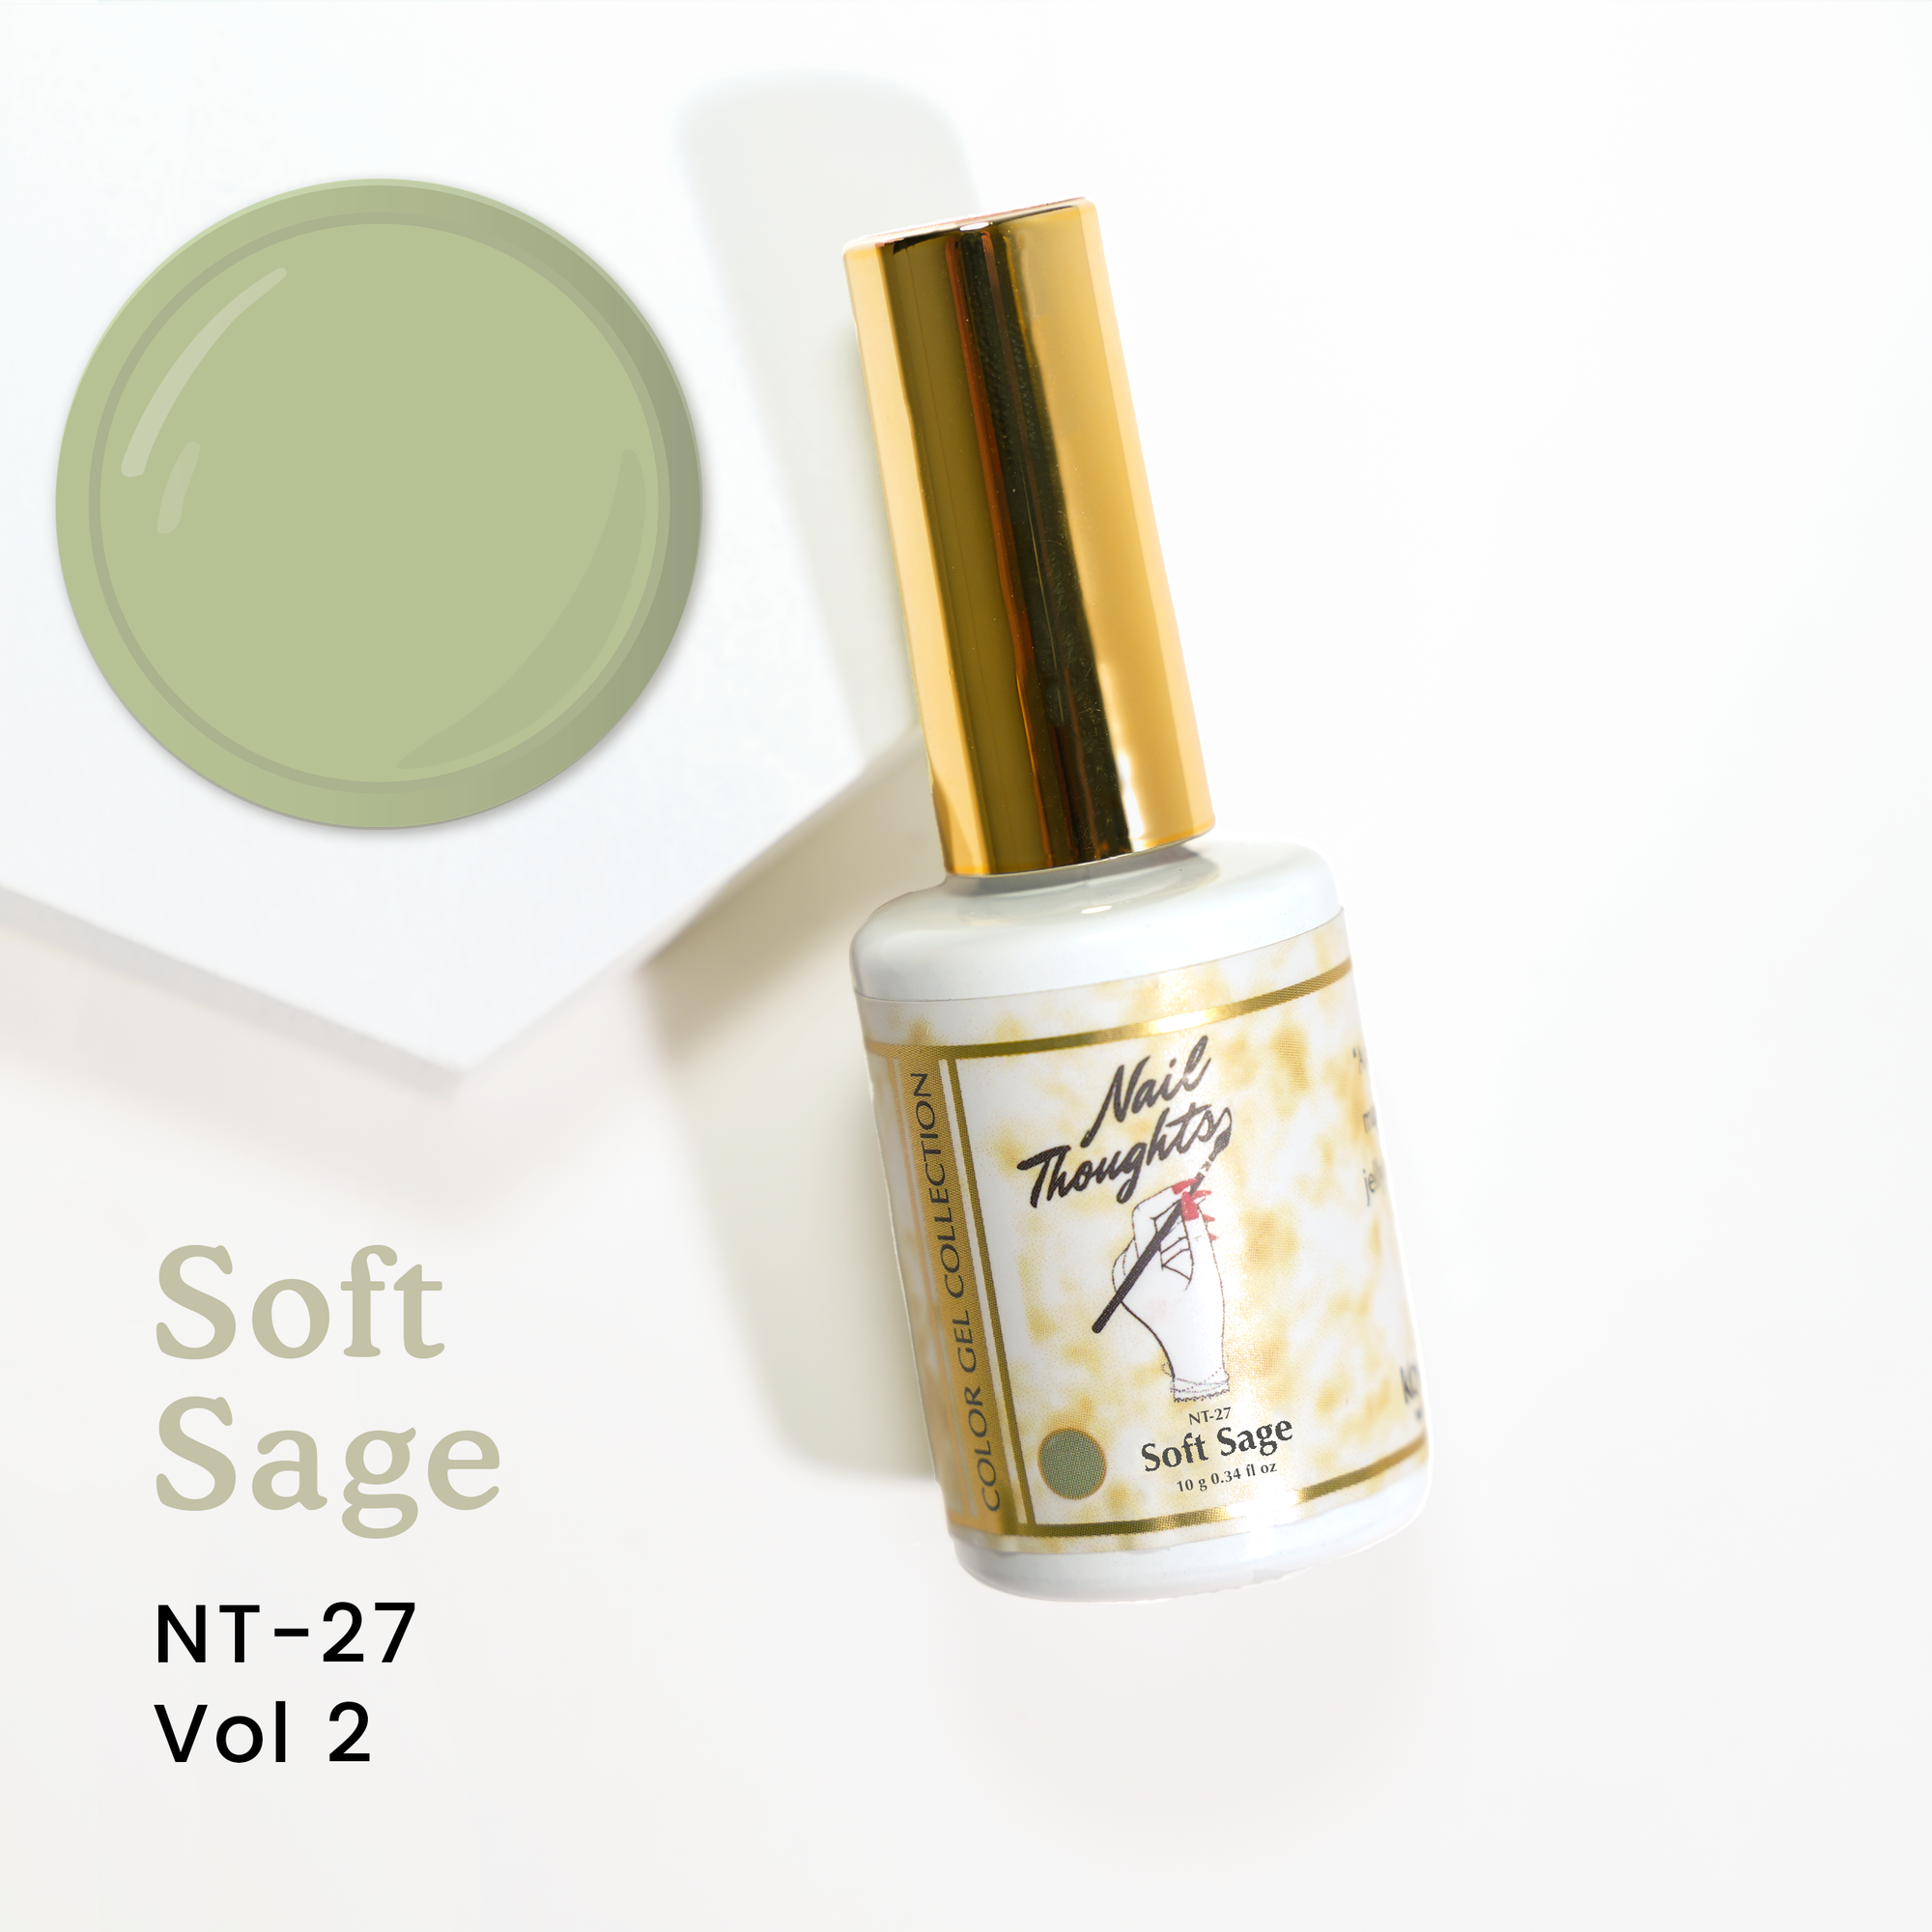 Soft Sage NT-27